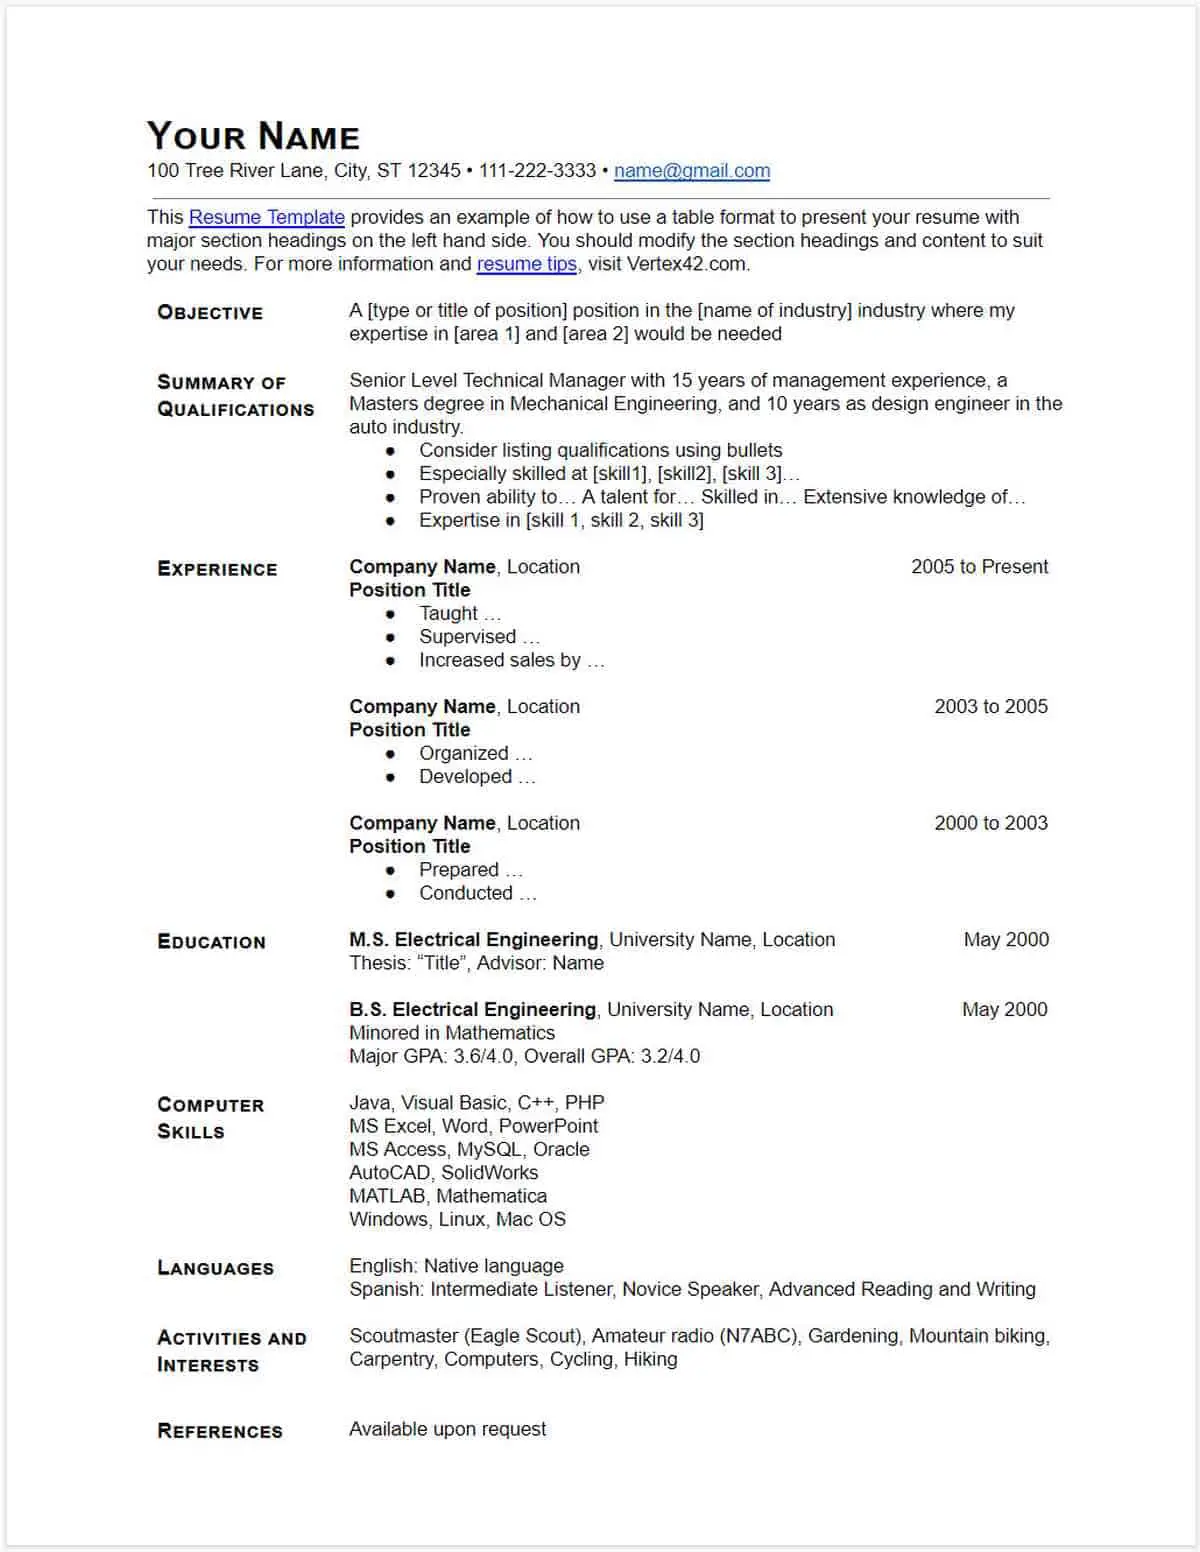 google-docs-template-resume